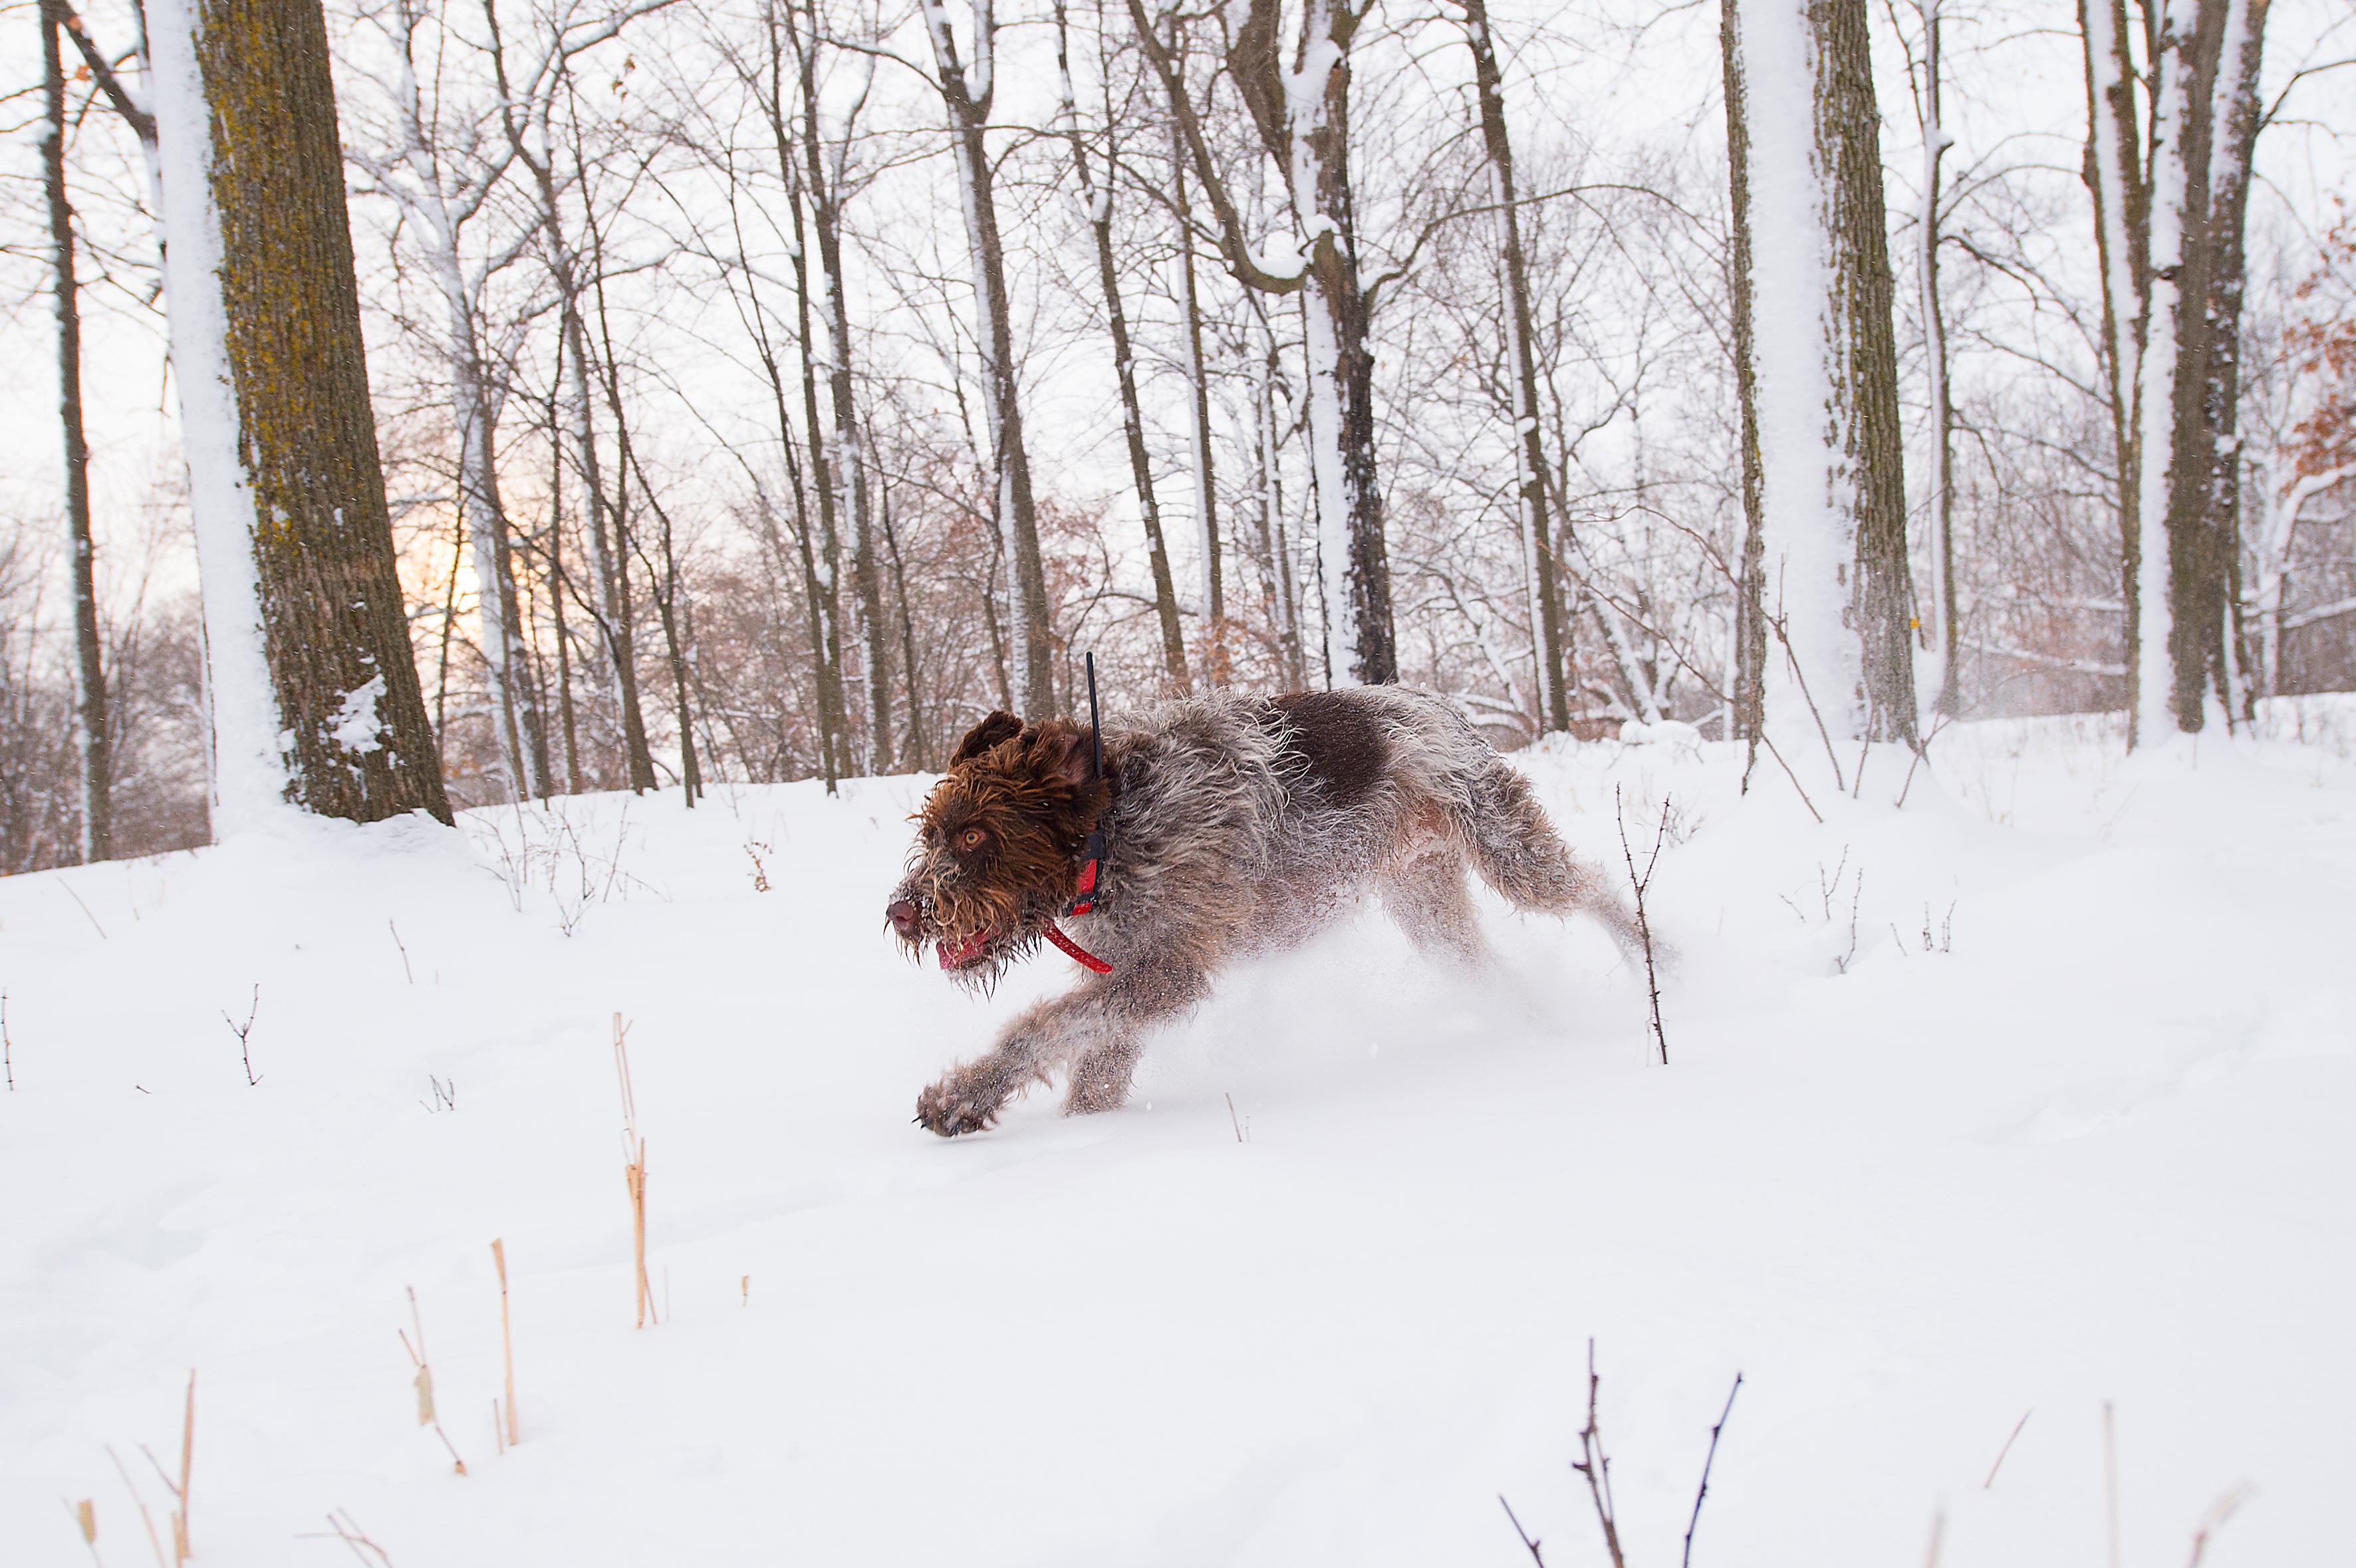 Draathar running through the snow.